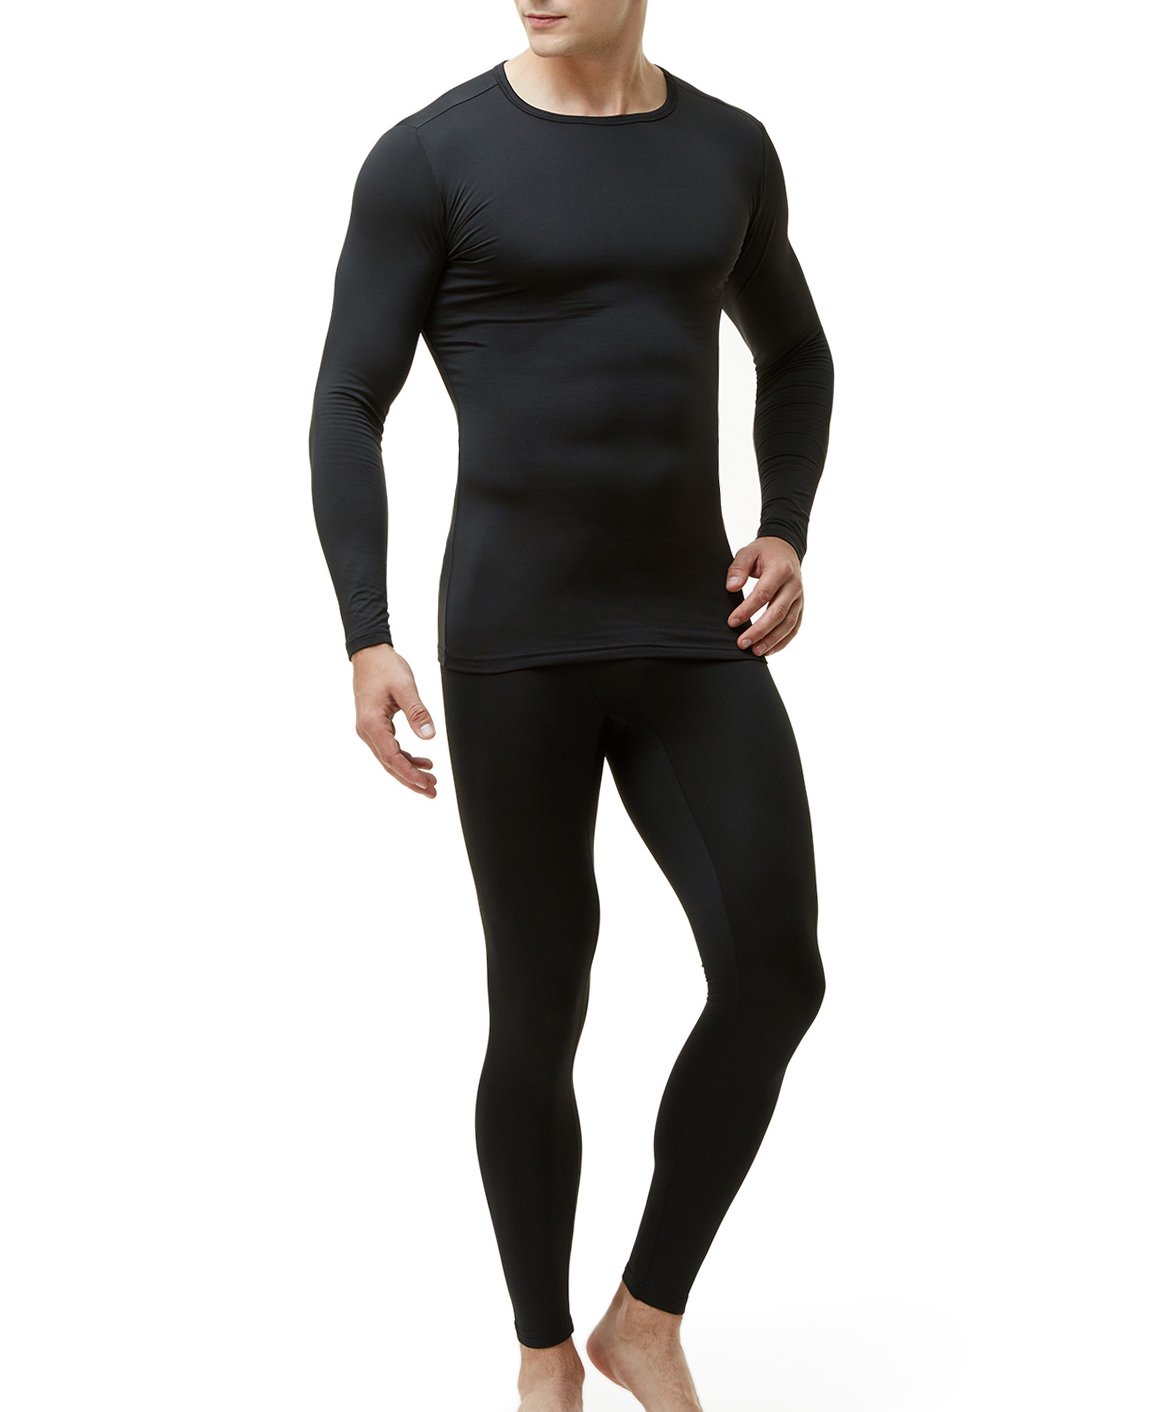 Mens Thermal Top Wear Winter Innerwear Pack Of 2 at Rs 676.00, Men Thermal  Wear